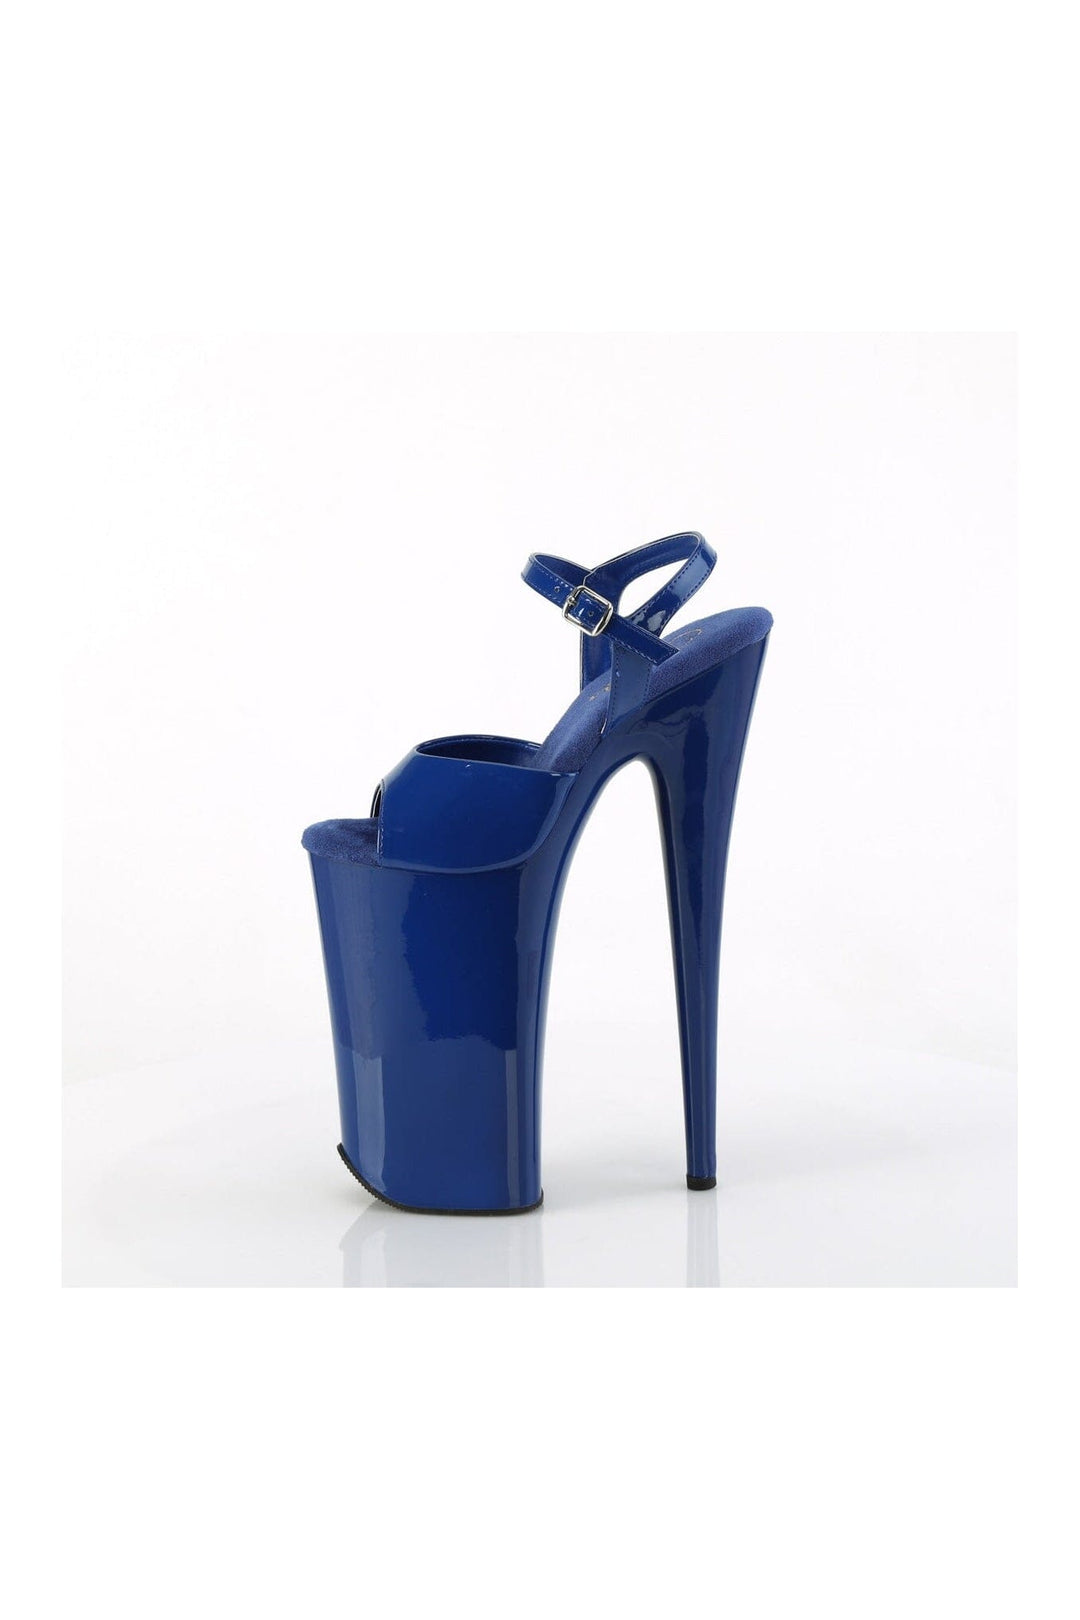 BEYOND-009 Blue Patent Sandal-Sandals- Stripper Shoes at SEXYSHOES.COM